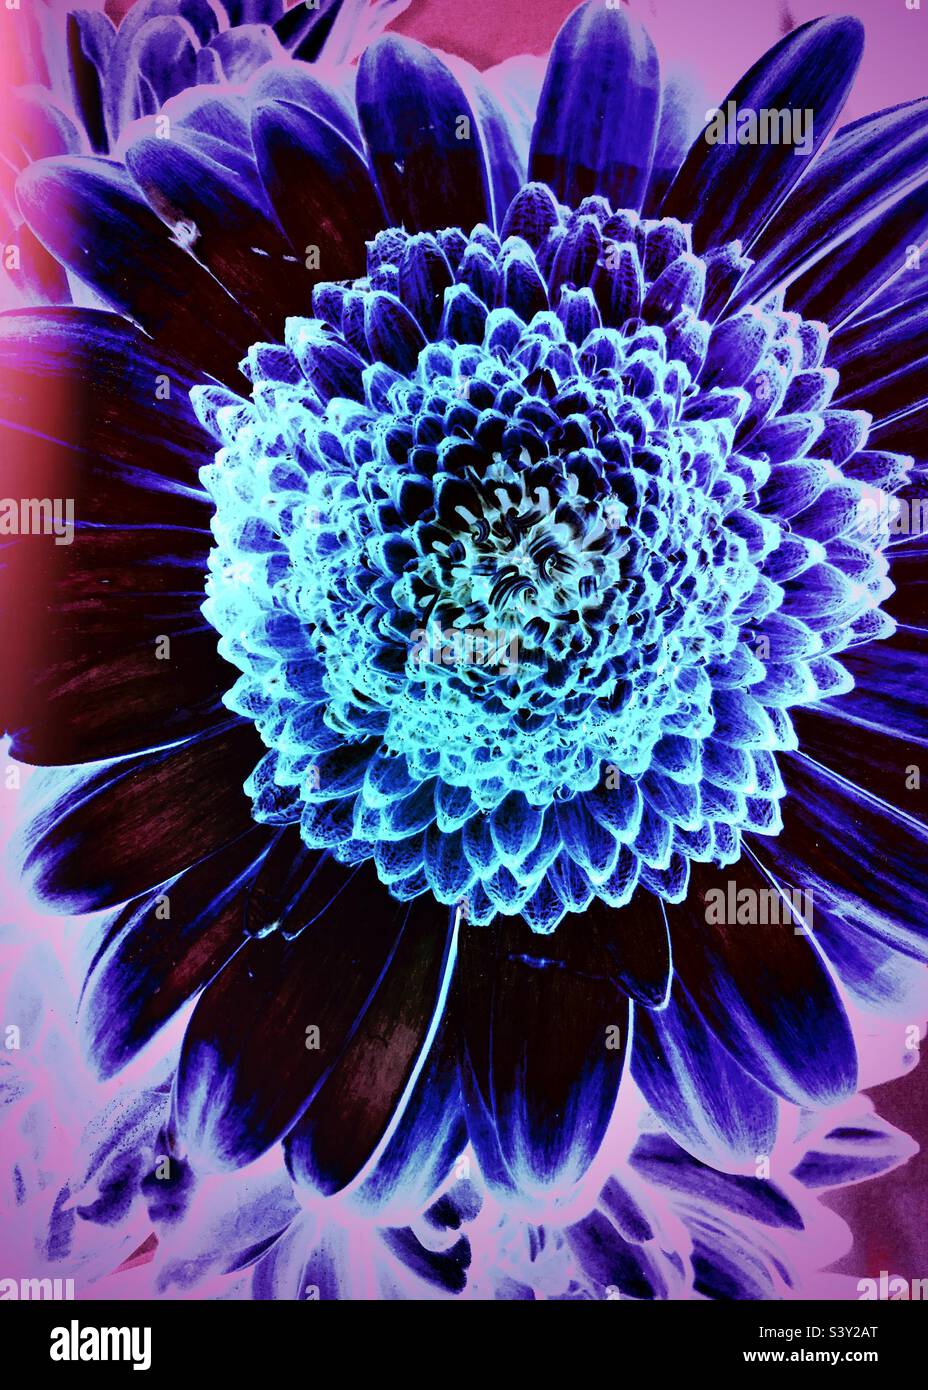 Chrysanthemum flower closeup with surreal indigo blue effect Stock Photo